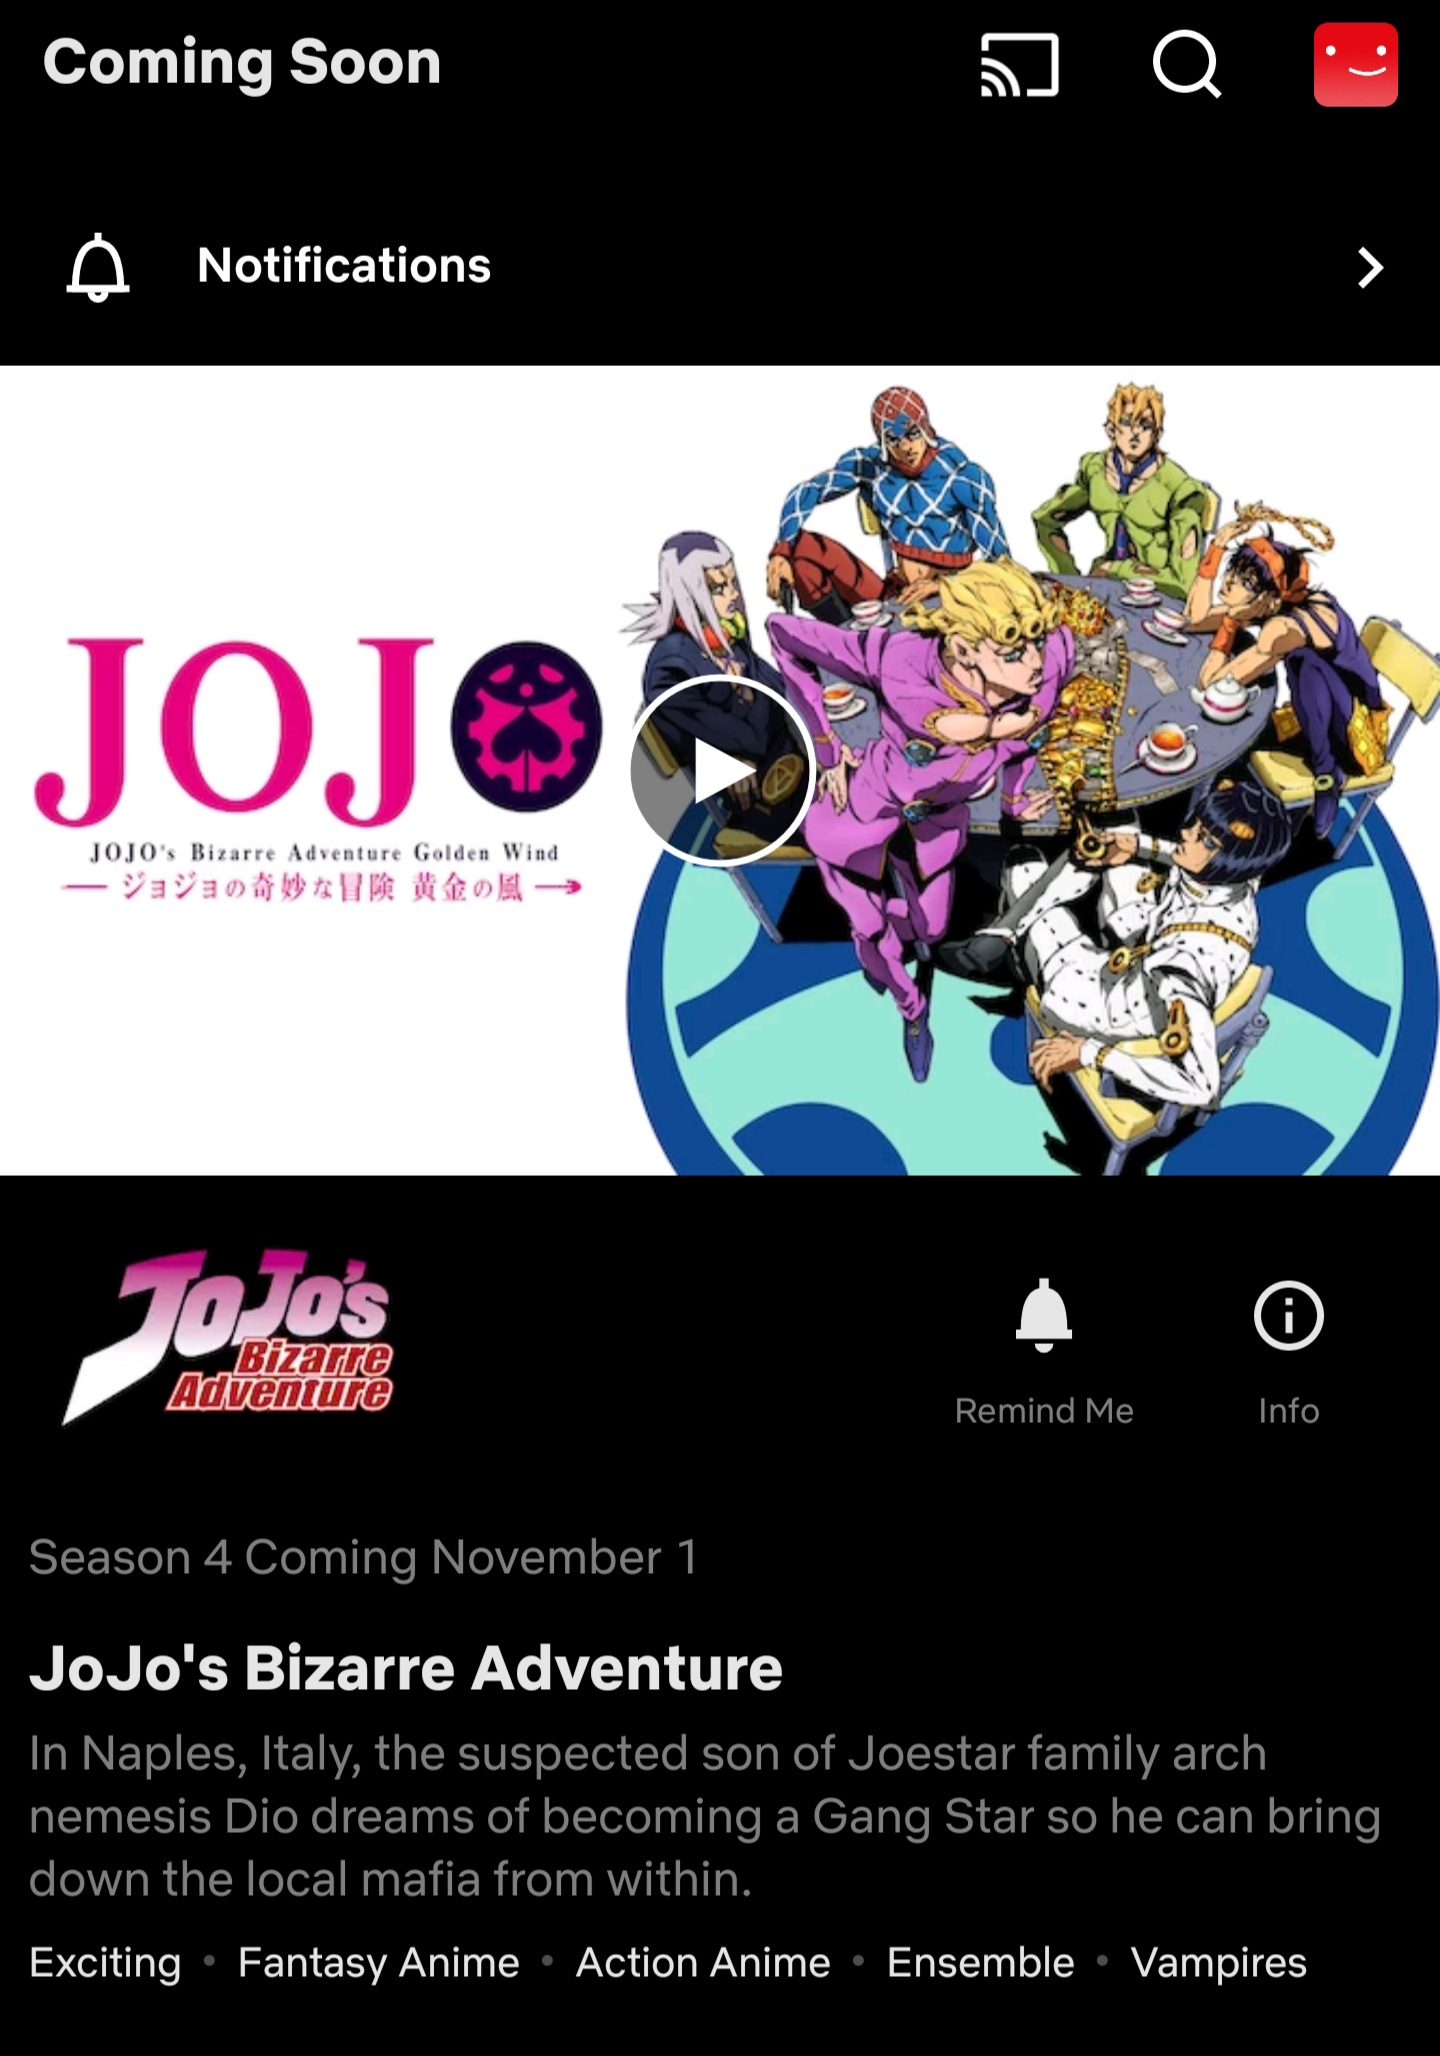 Jojo's Bizarre Adventure: Golden Wind chegará em breve à Netflix